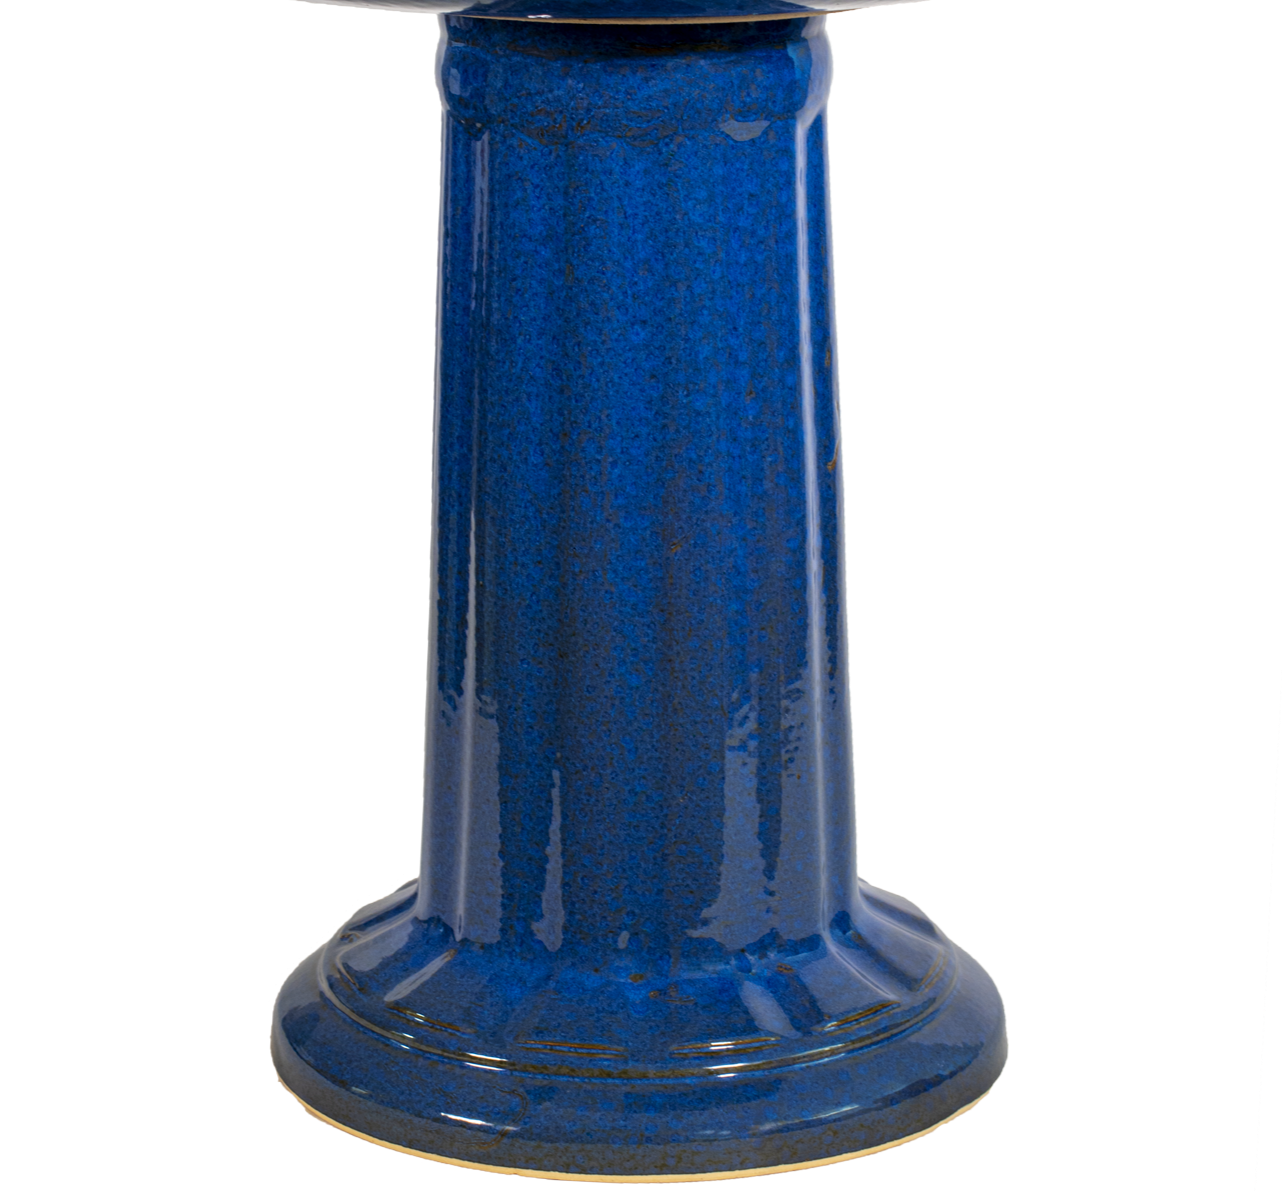 ceramic blue birdbath pedestal with column design